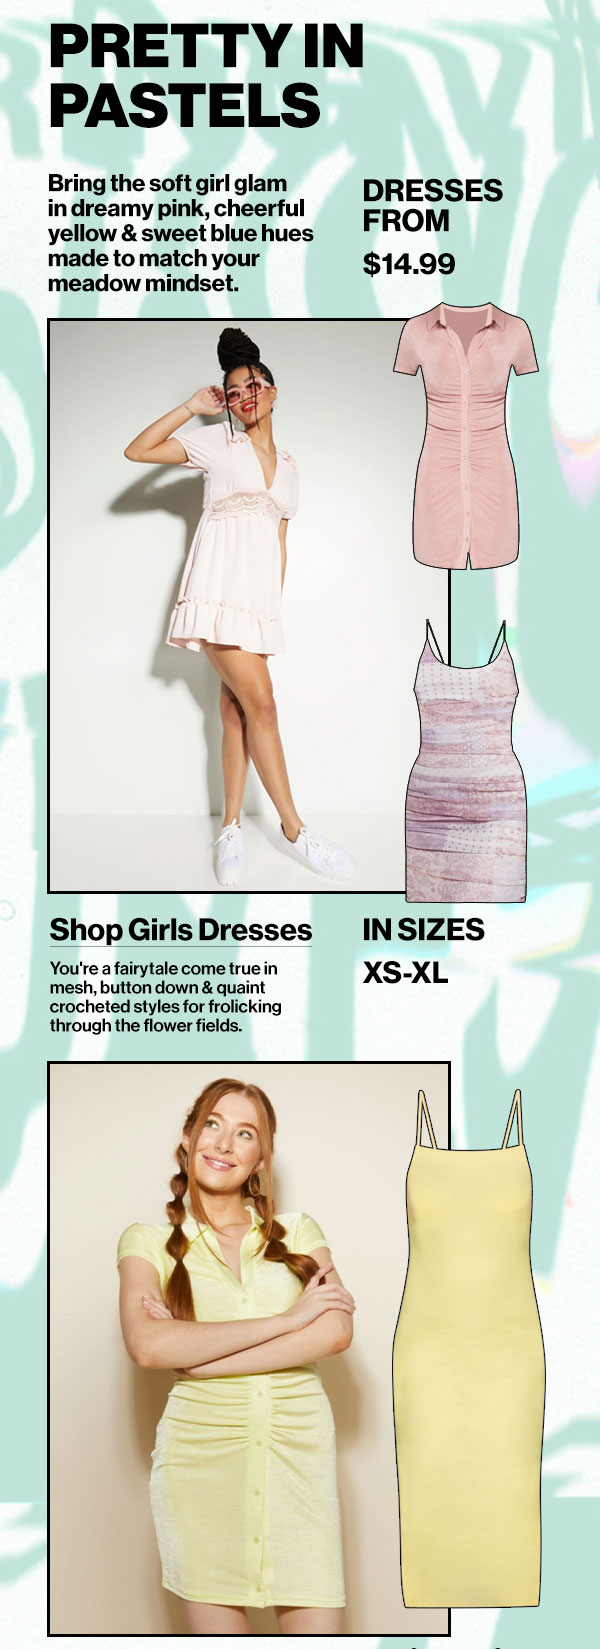 Shop Girls Dresses